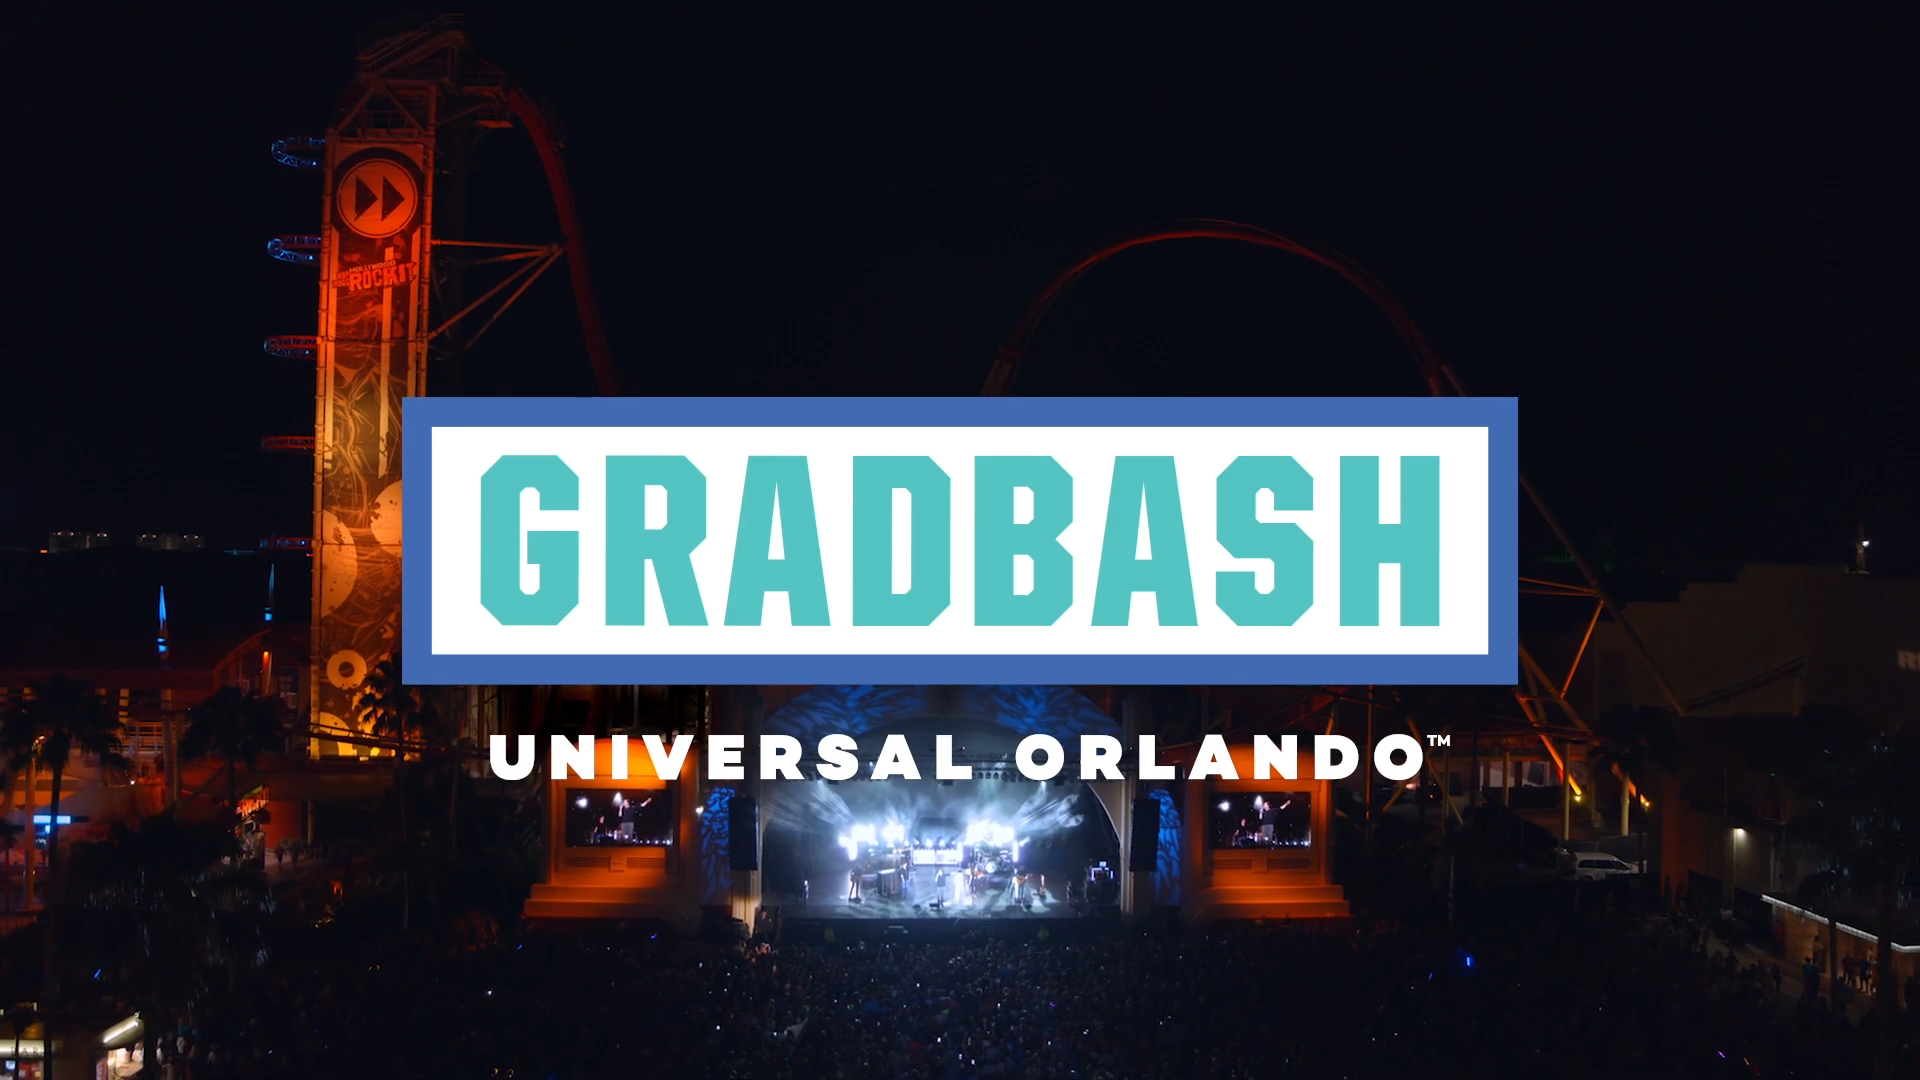 Graduation Events To Return At Universal Orlando Resort In 2022